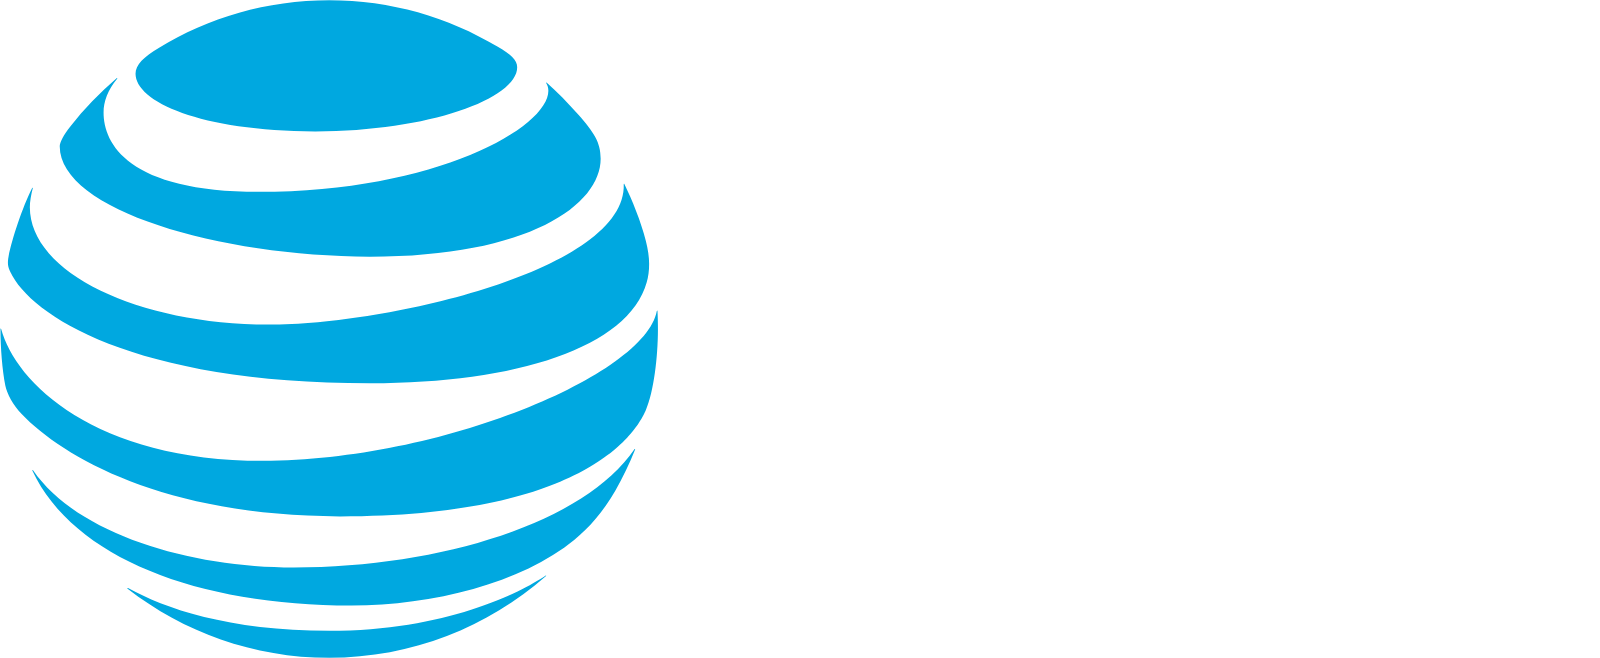 AT&T logo large for dark backgrounds (transparent PNG)